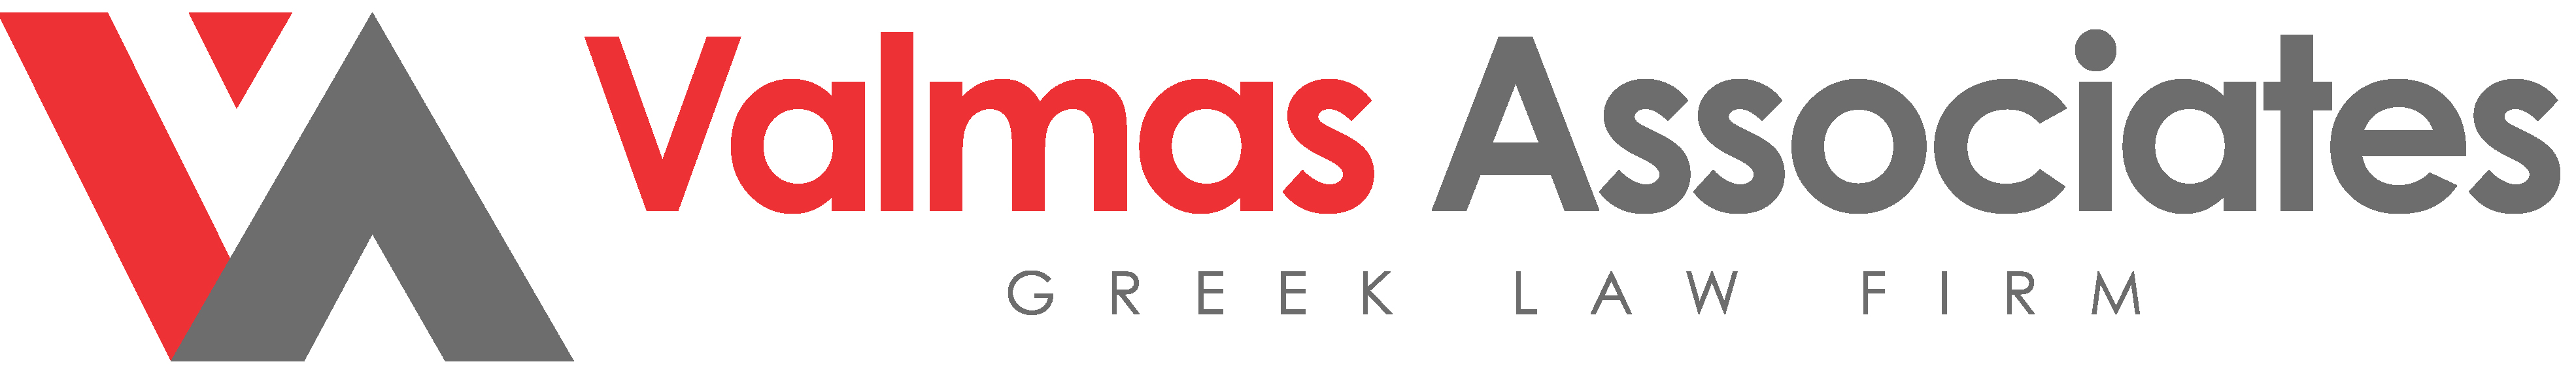 Valmas & Associates Greek Law Firm Logo